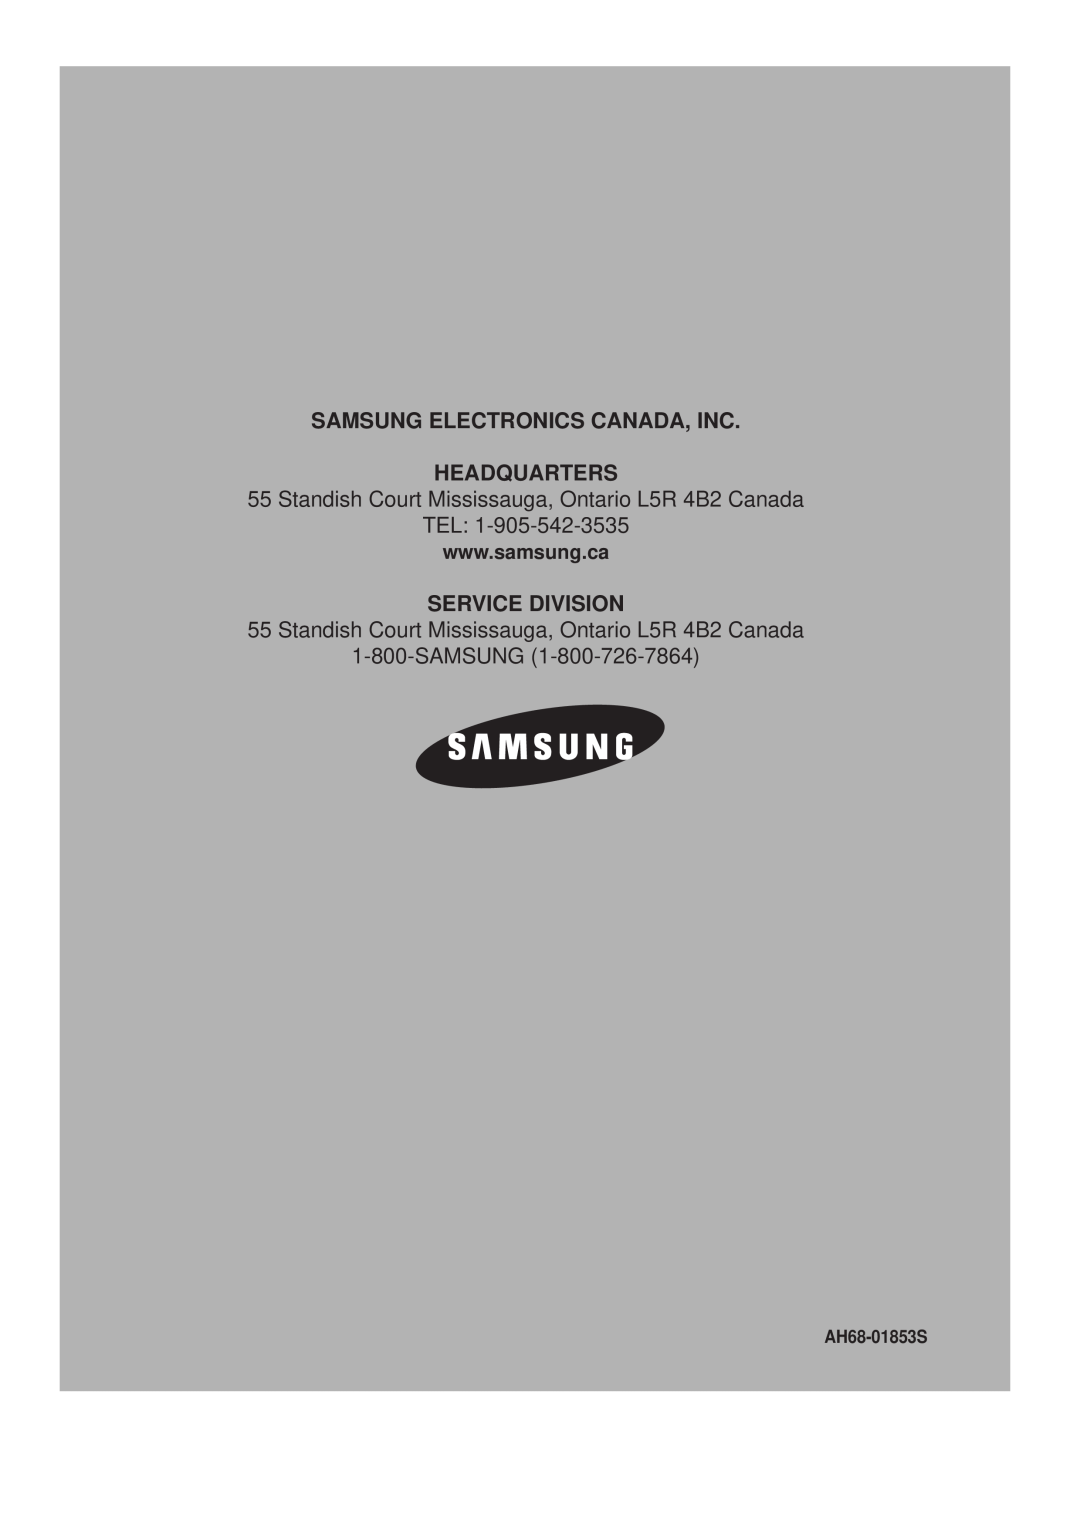 Samsung AH68-01853S, 20060510083254531, AV-R610 manual Samsung Electronics Canada, Inc Headquarters, Tel, Service Division 